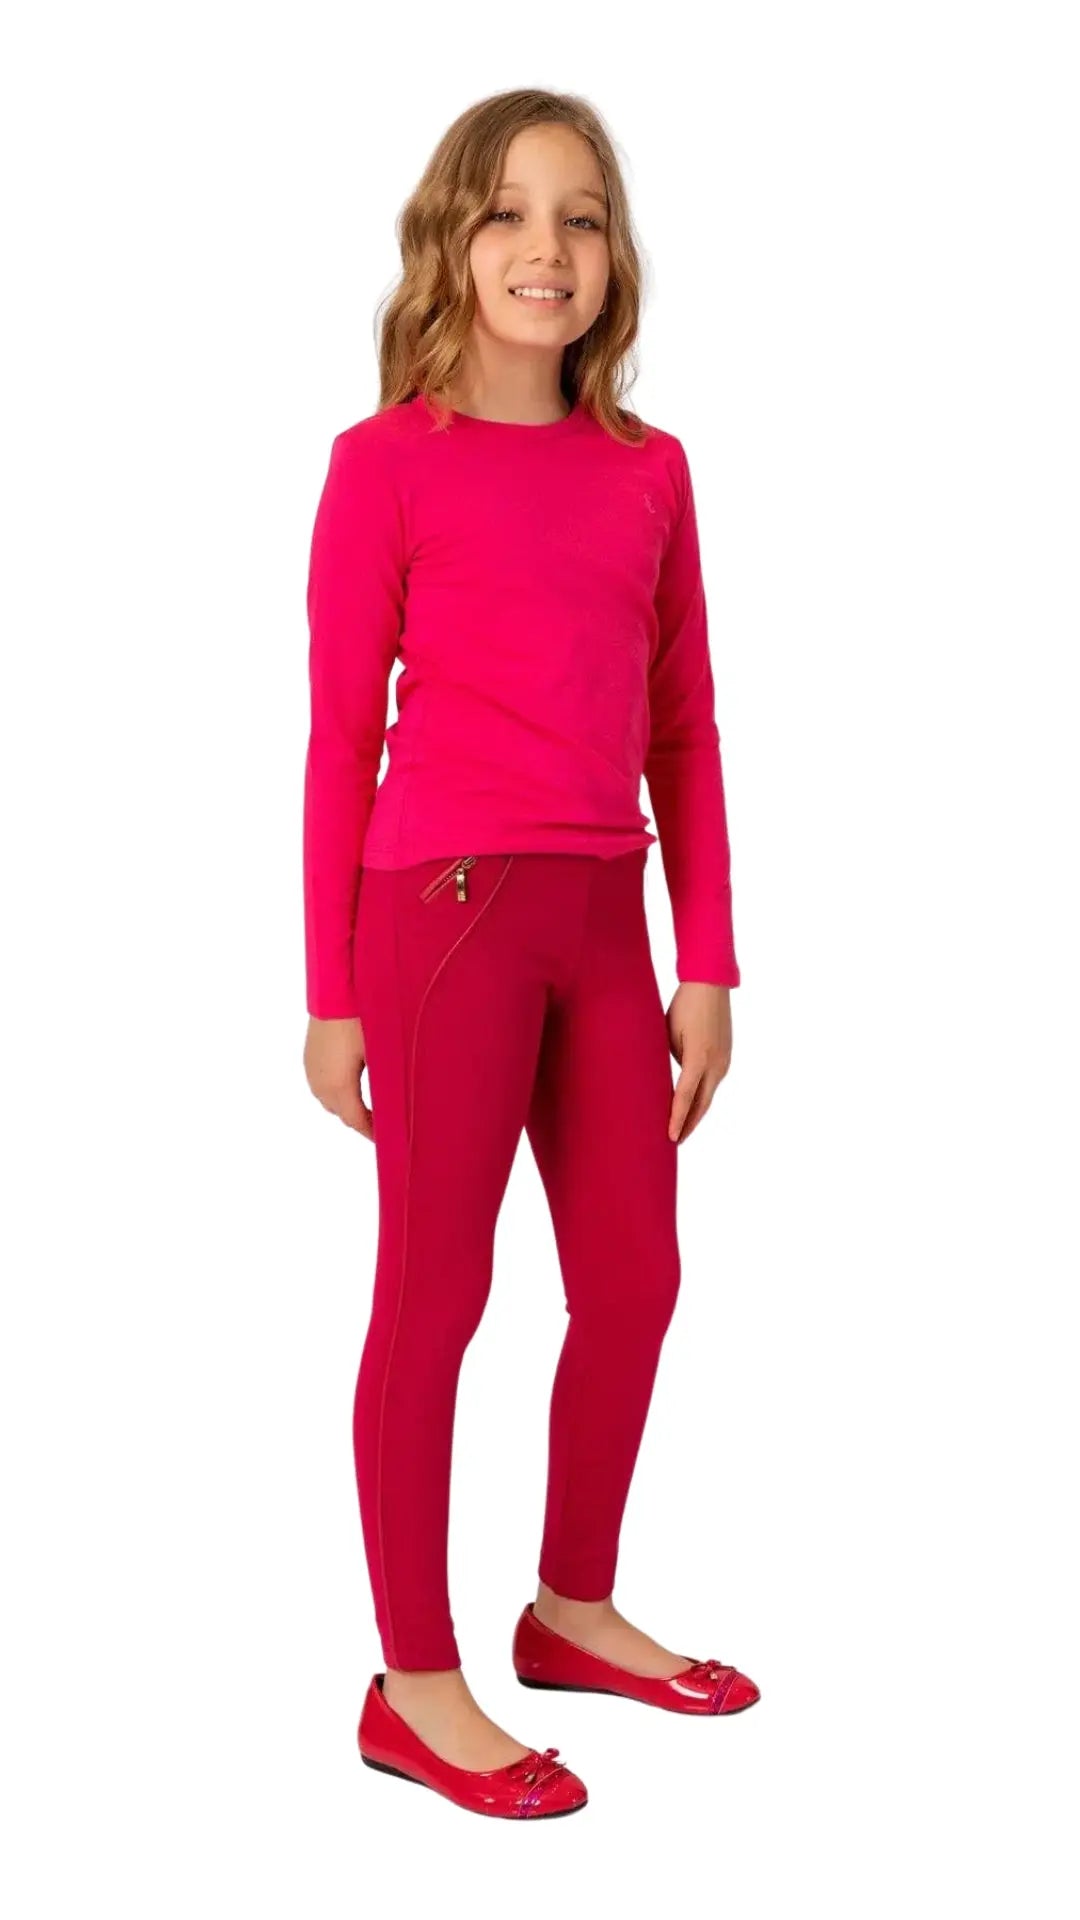 InCity Girls Tween 7-14 Years Fuchsia Red Mid-Rise Regular Fit Cotton